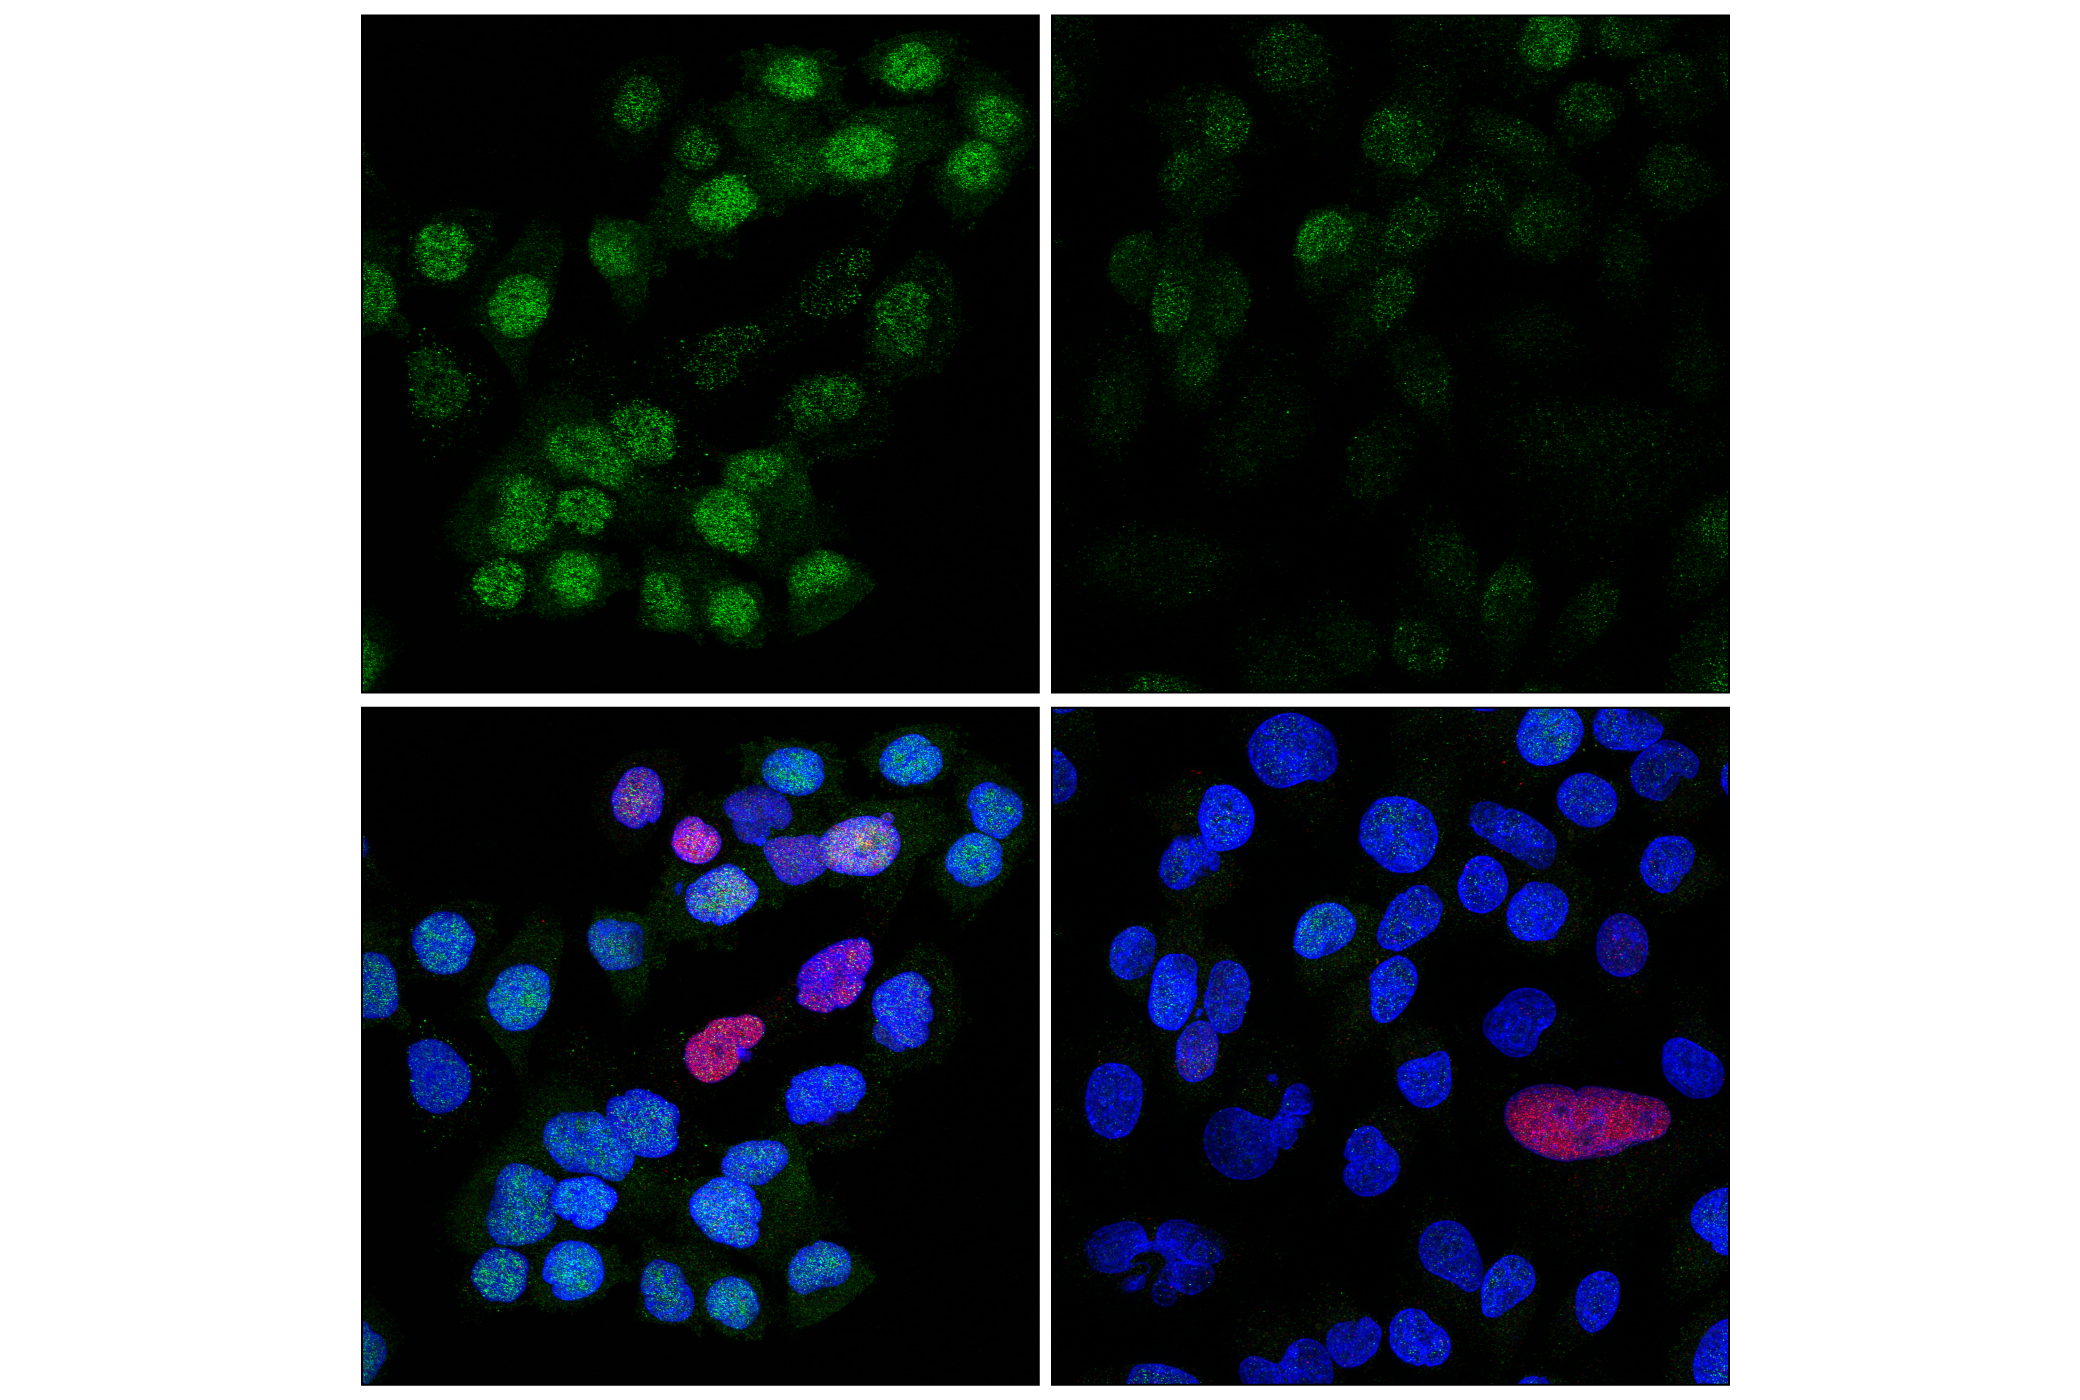  Image 2: PhosphoPlus® Chk1 (Ser317) Antibody Duet